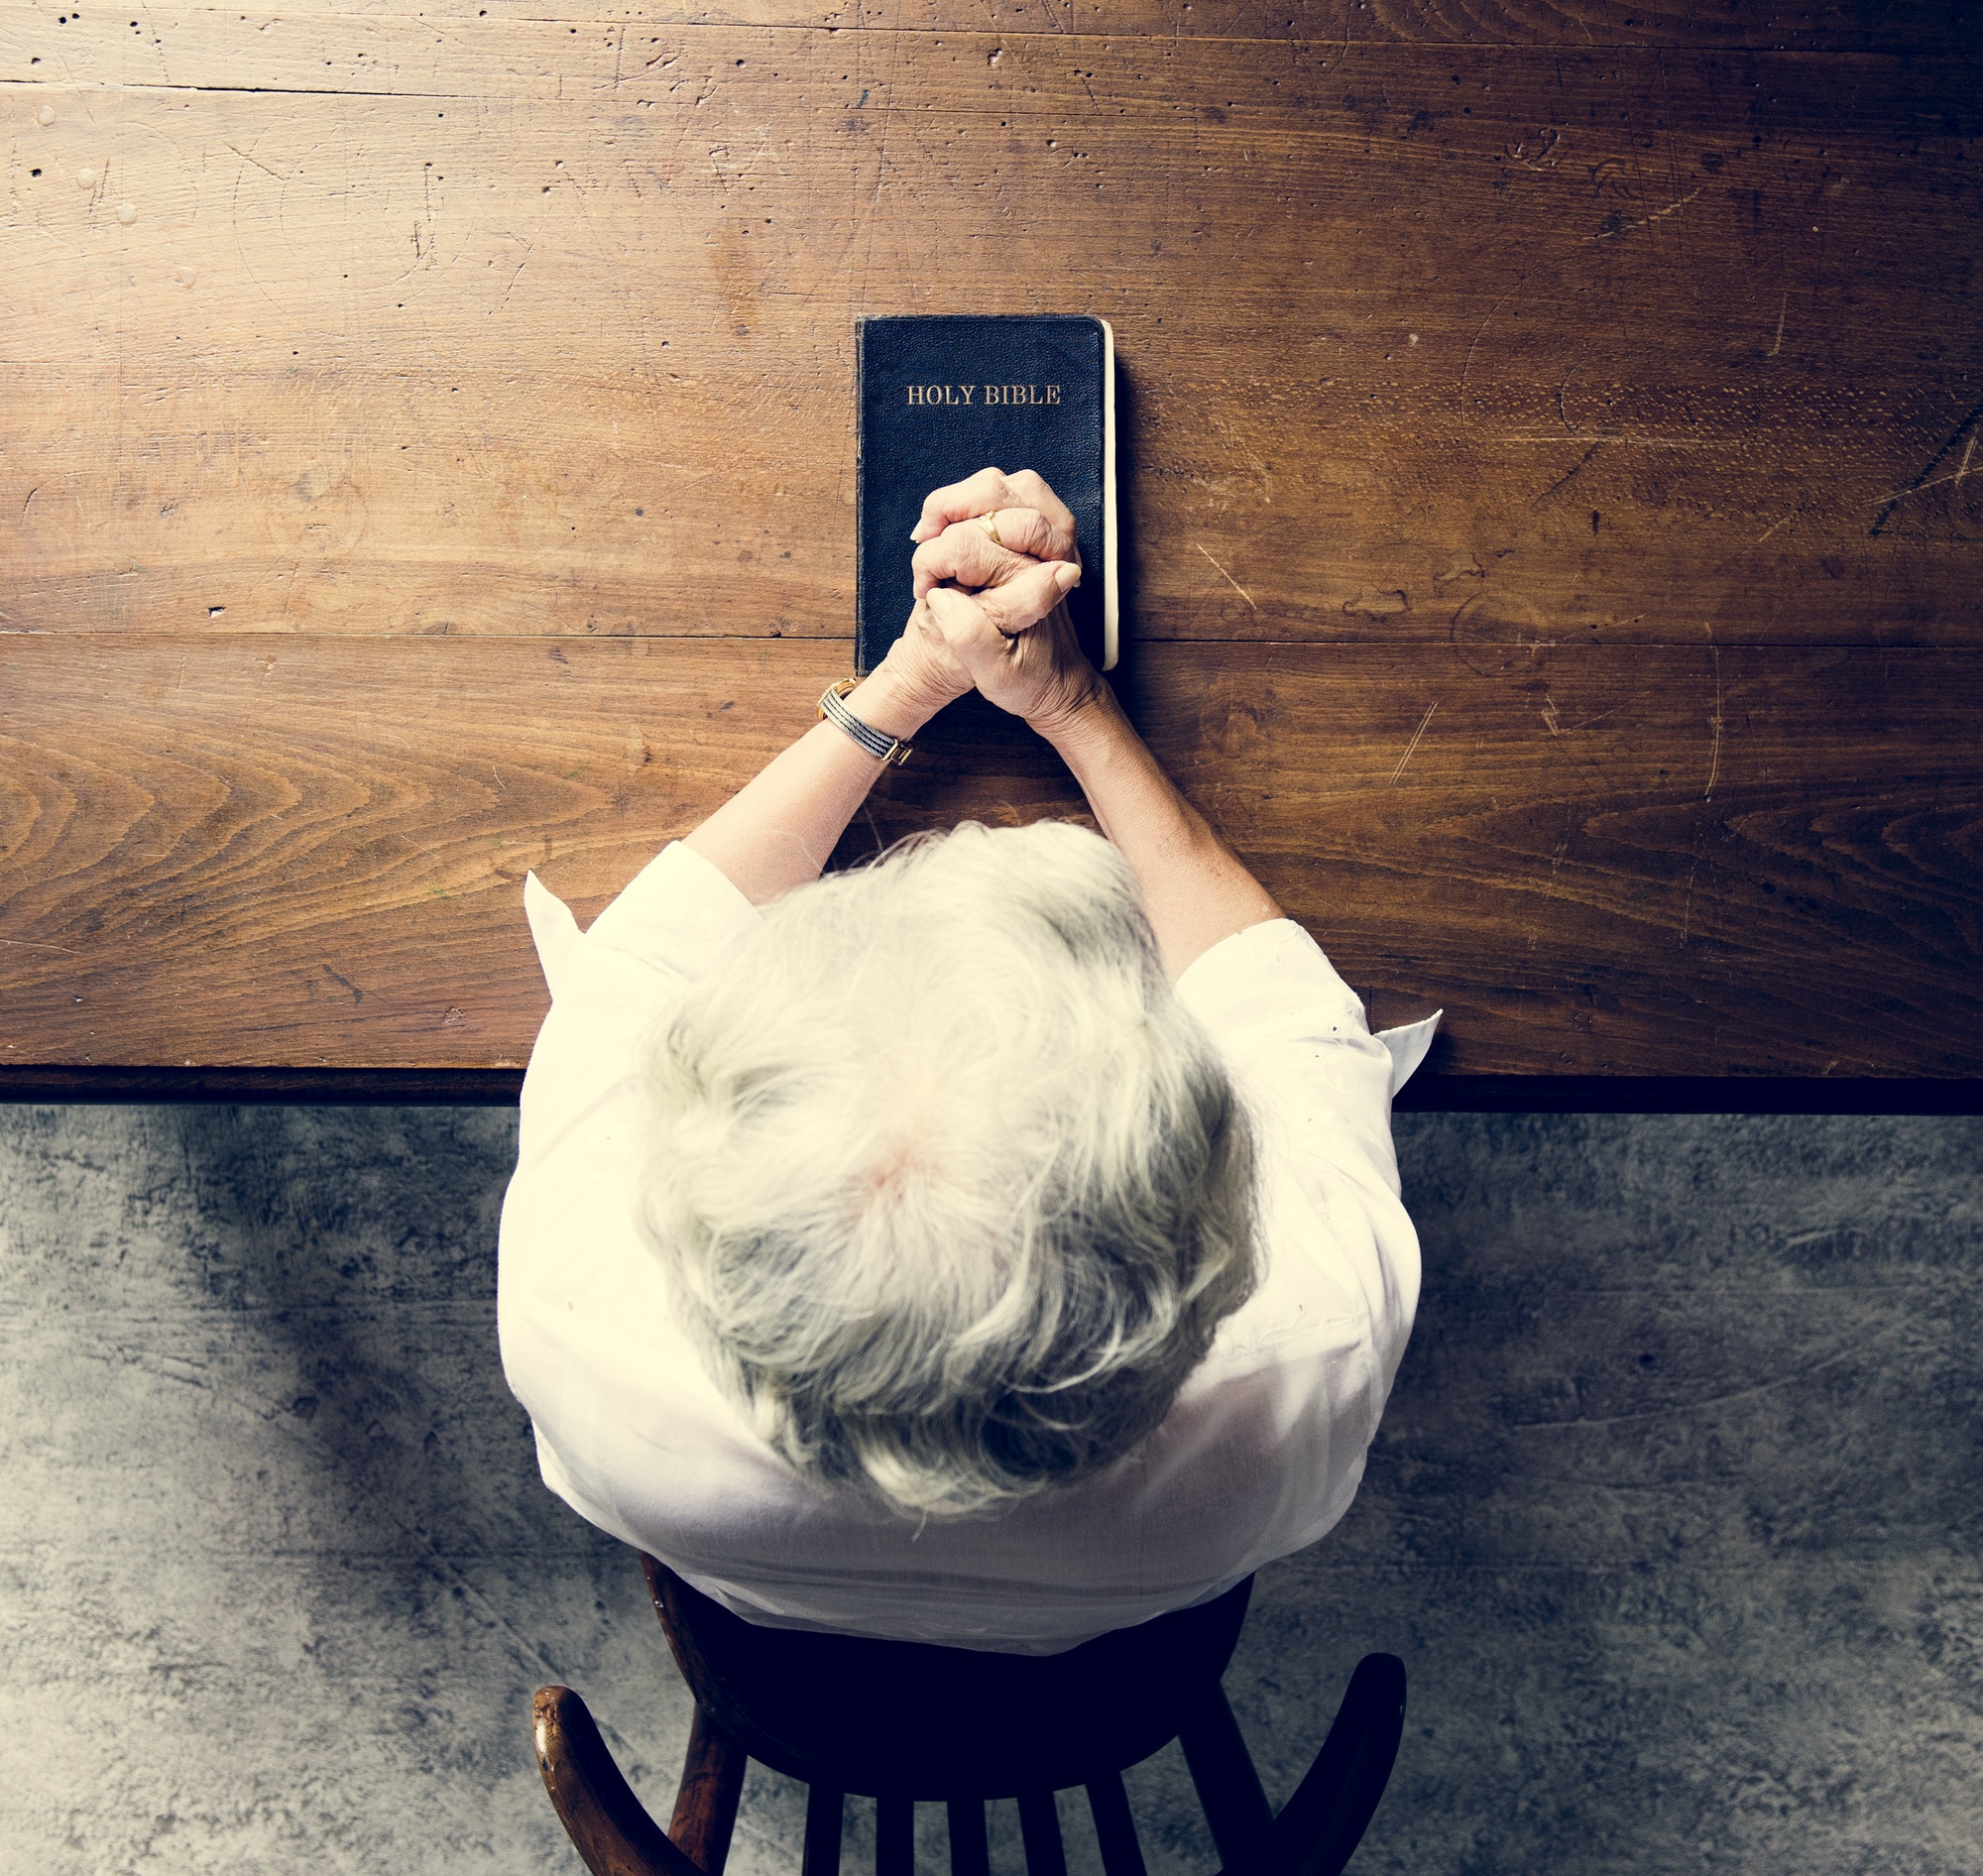 Senior woman prayer faith in christianity religion